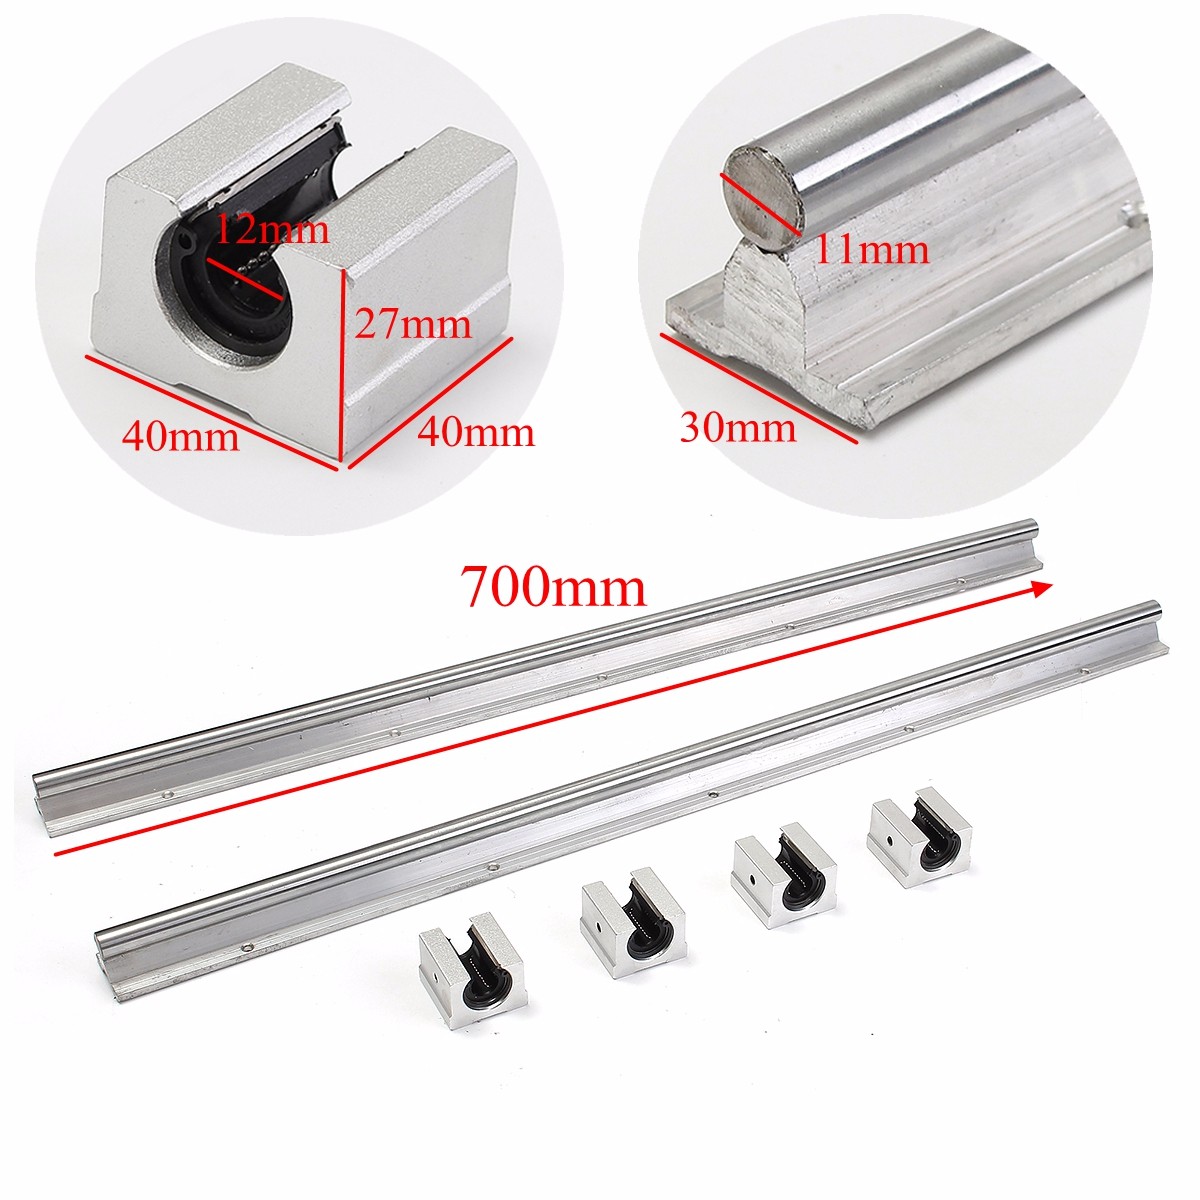 2Pcs SBR12-700mm Linear Bearing Slide Rails Linear Guide + 4Pcs SBR12UU Blocks For 3D Printer CNC 68